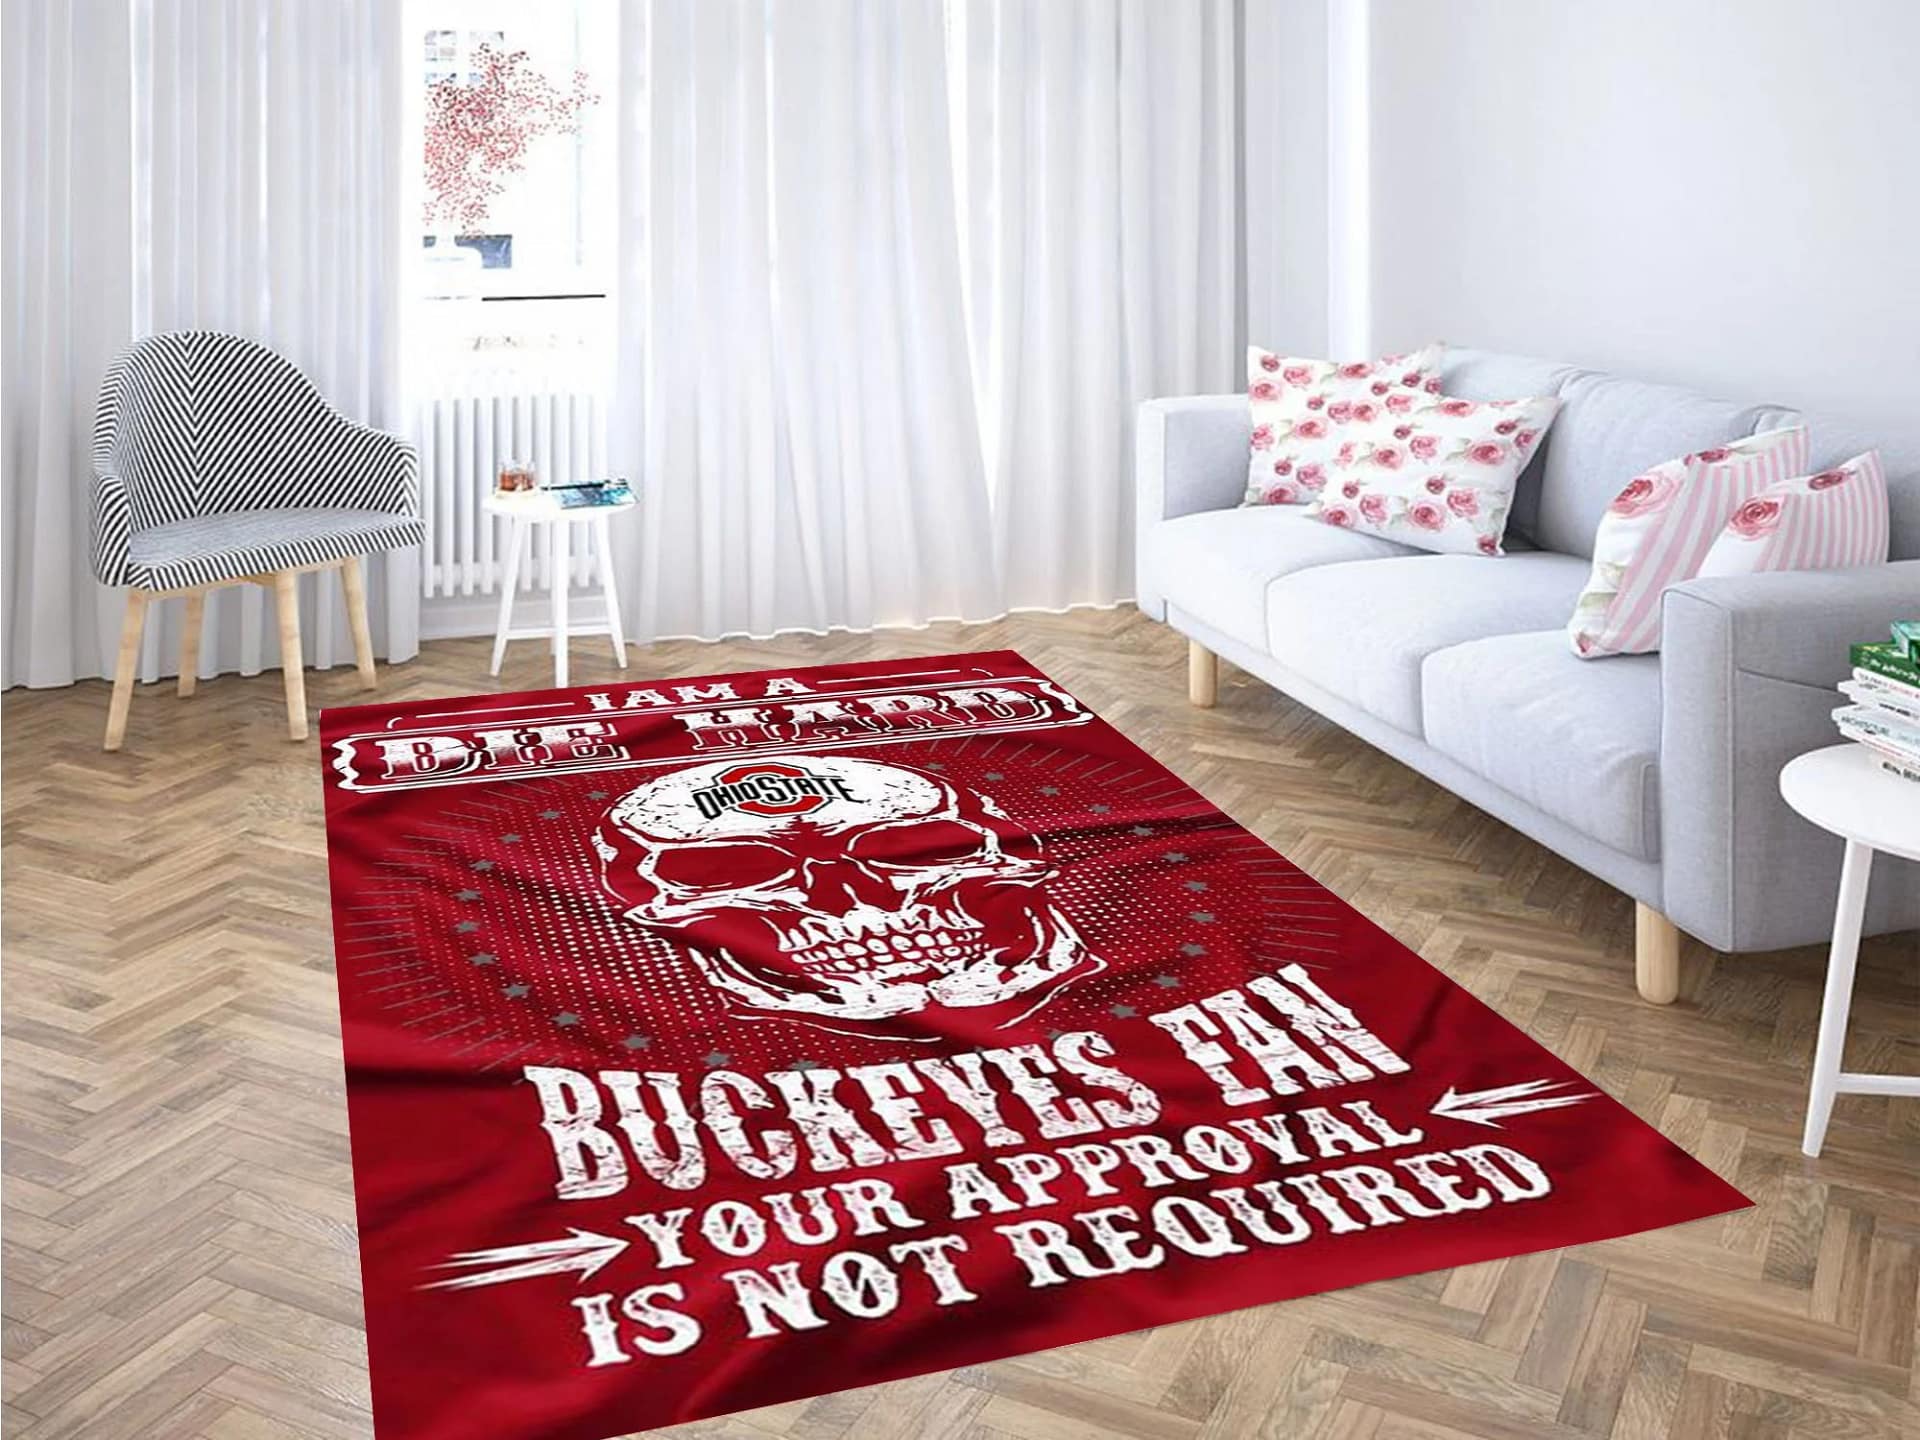 Die Hard Iam Buckeyes Fan Carpet Rug